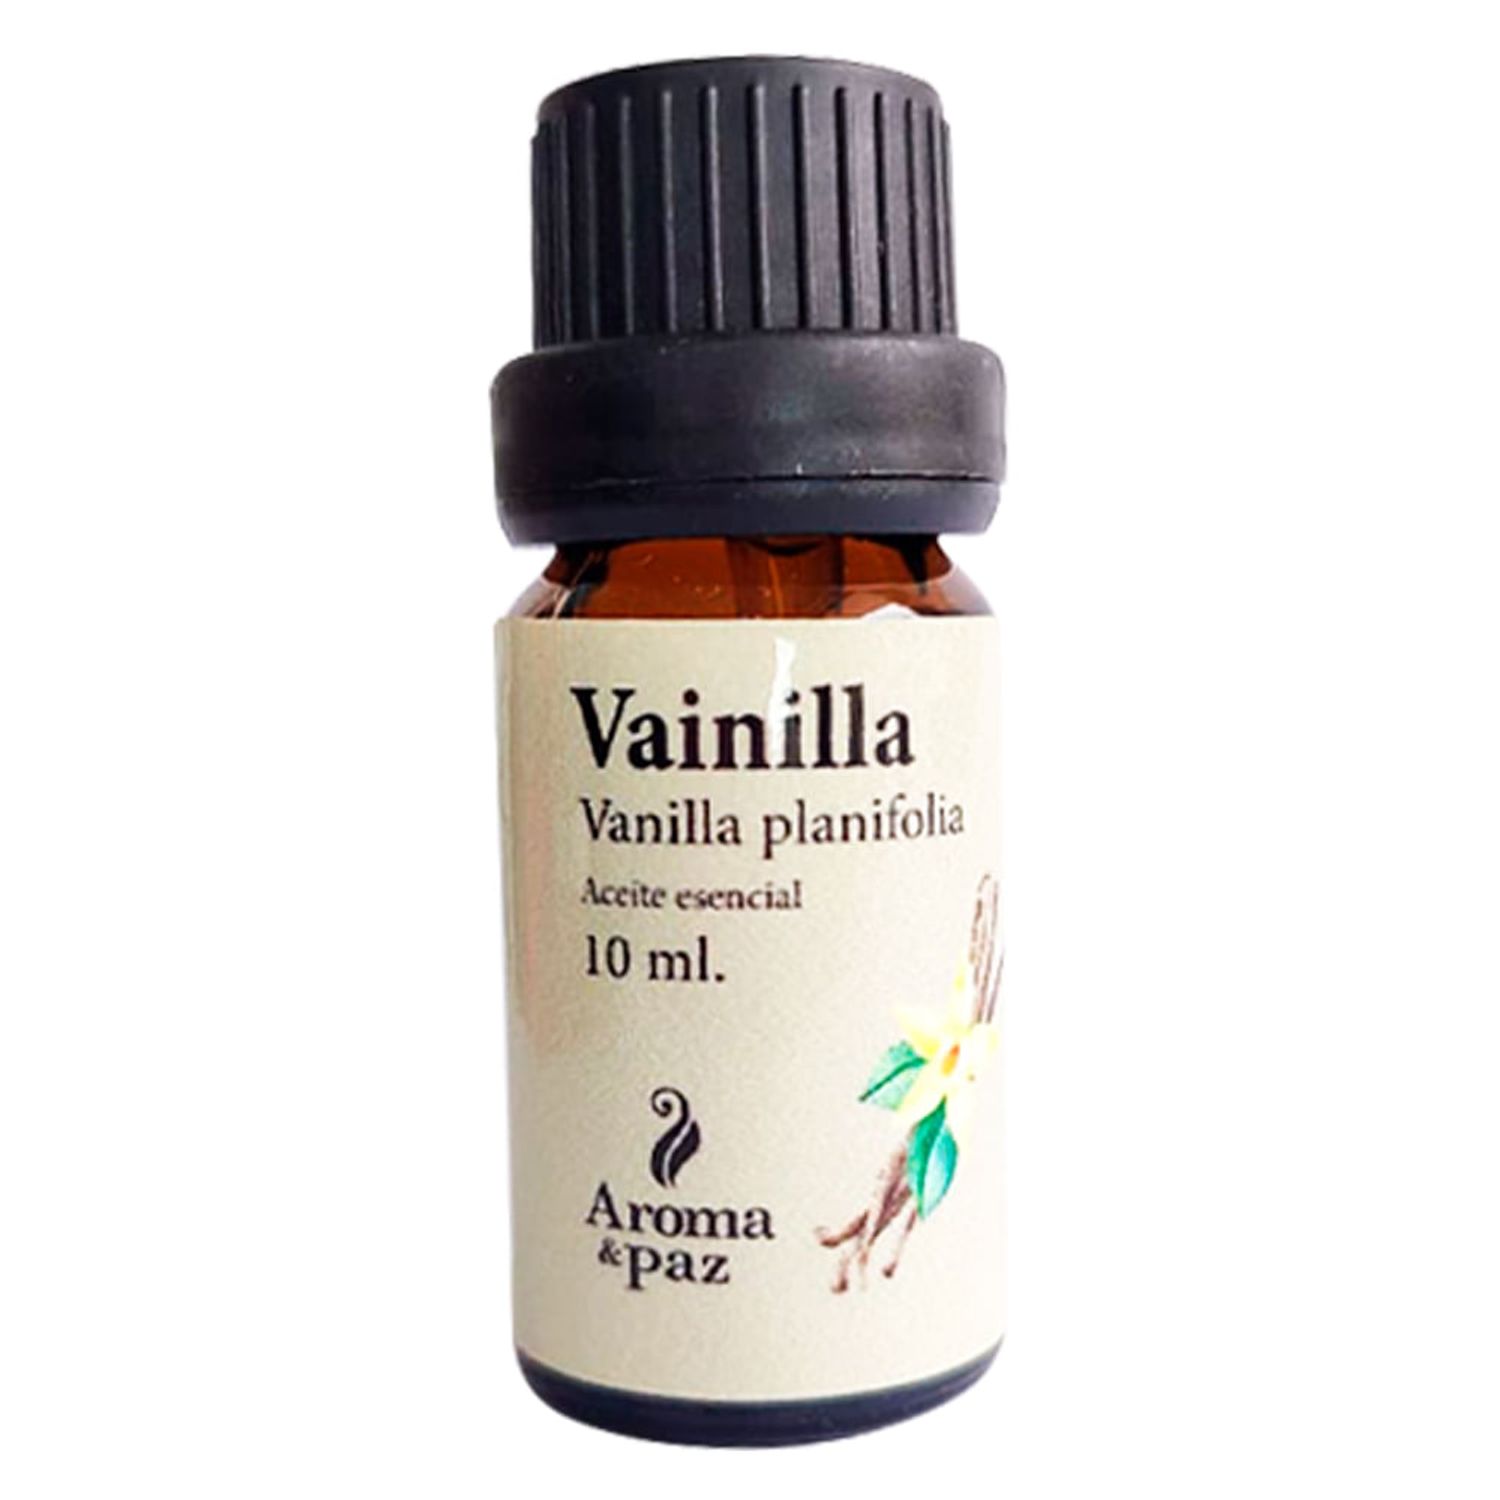 Aceite Esencial Aroma y Paz Vainilla 10ml I Oechsle - Oechsle